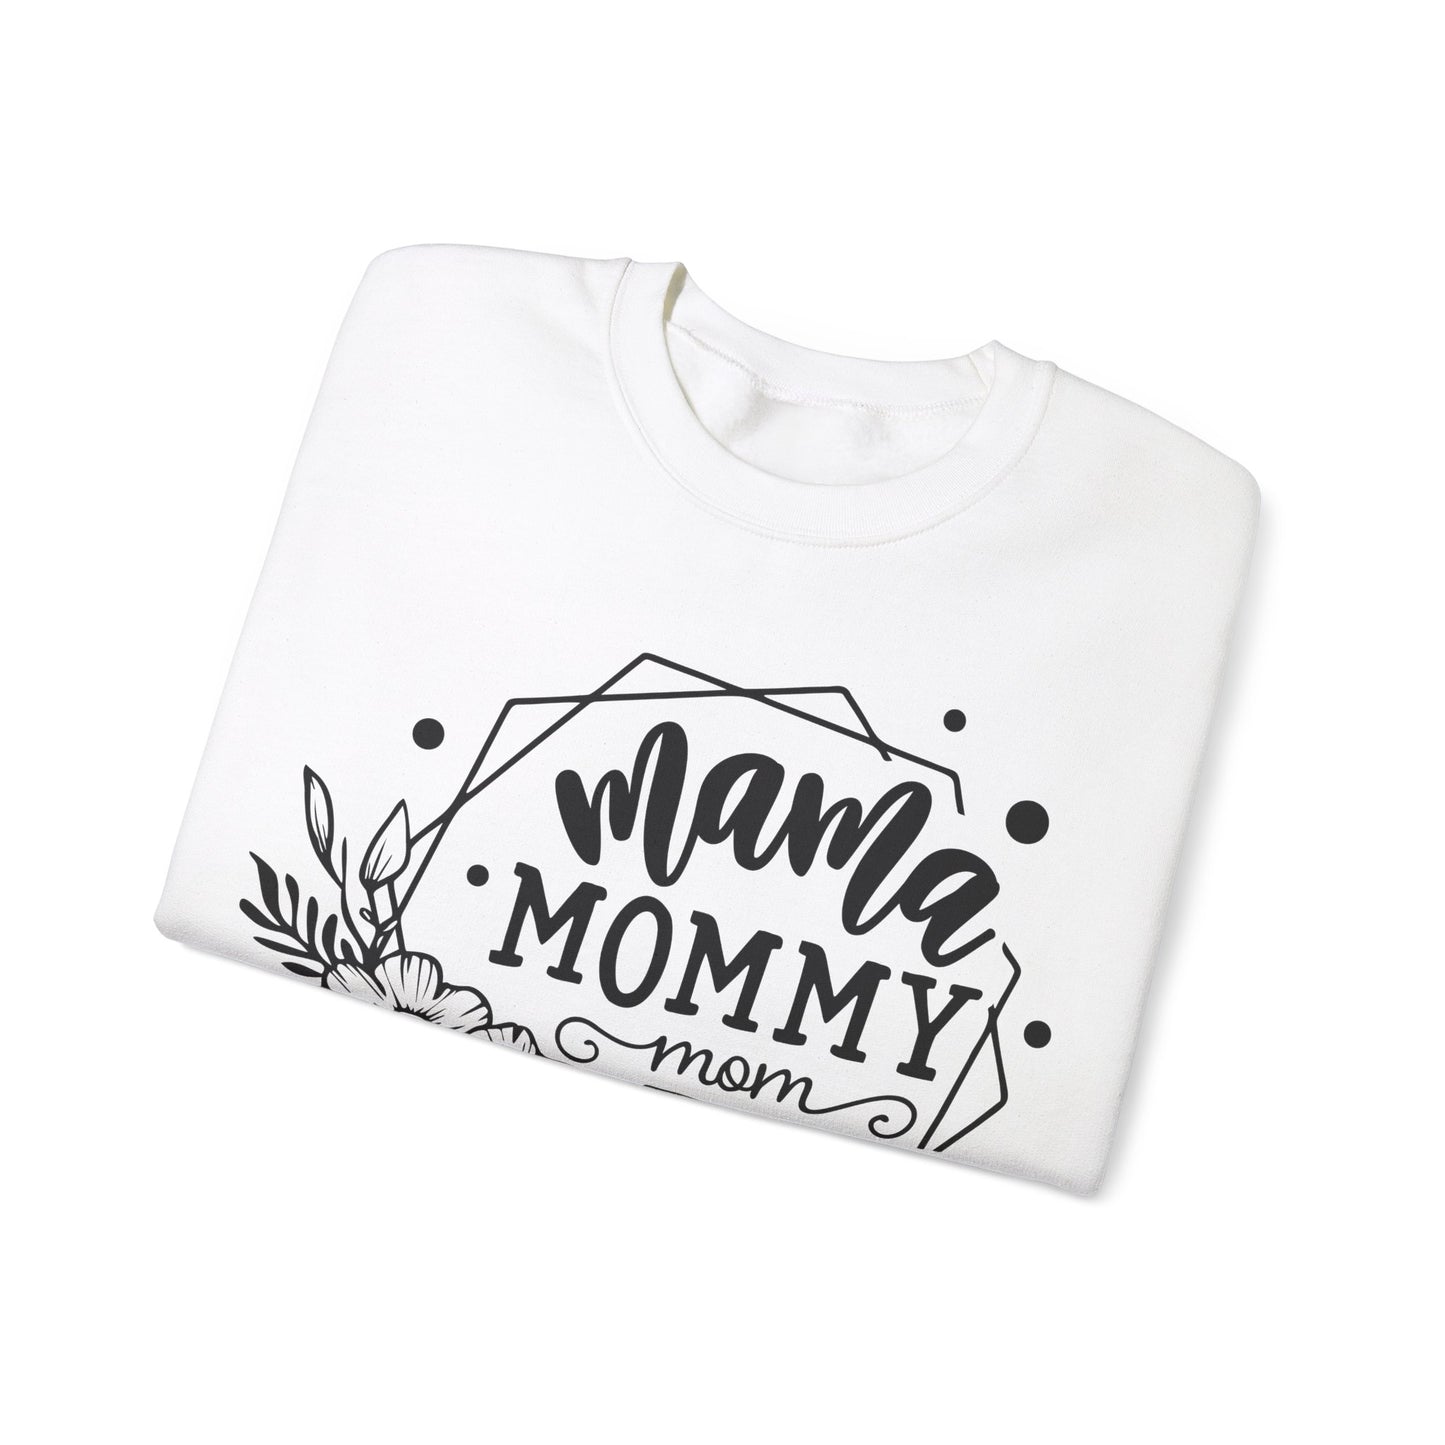 Mama Mommy Mom Bruh - Crewneck Sweatshirt